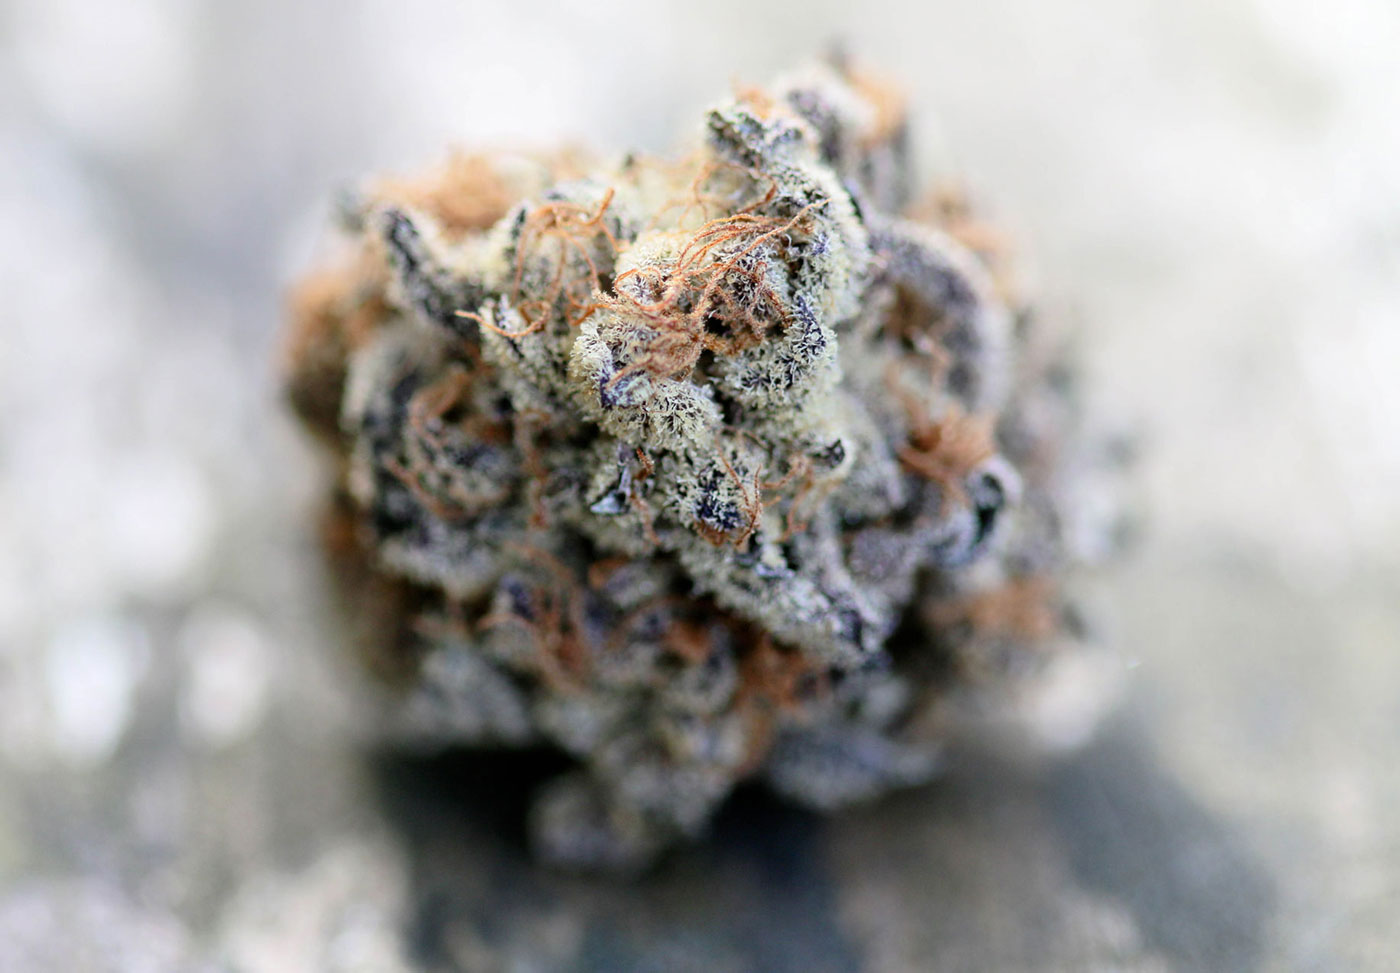 Closeup photography of cannabis bud